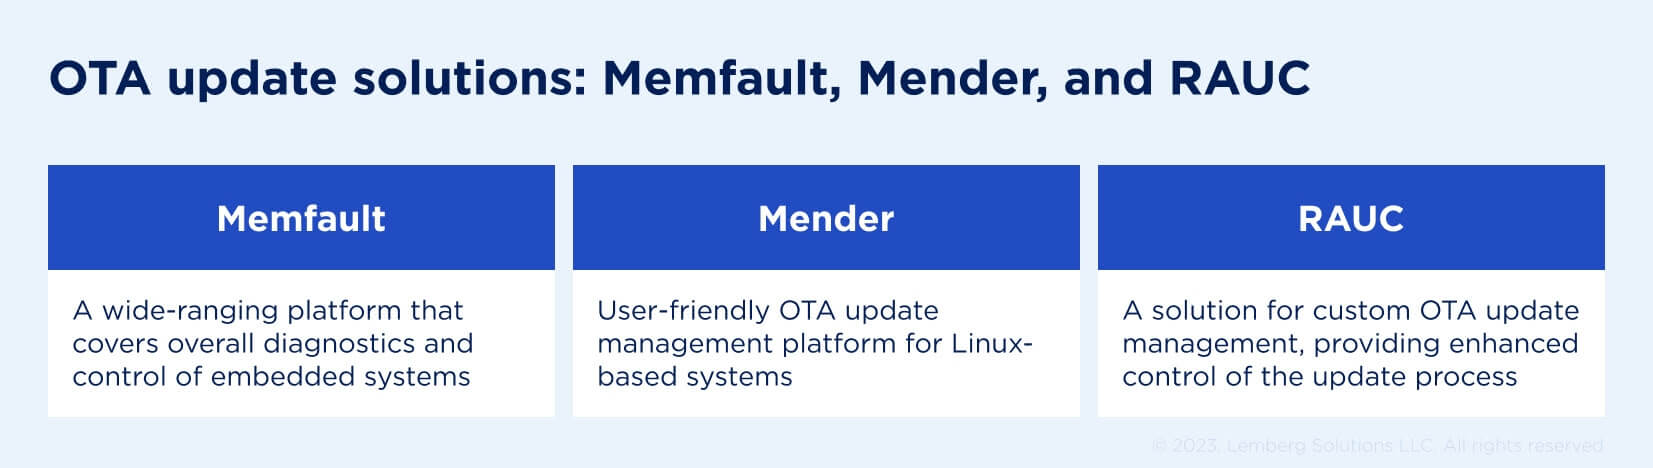 OTA update solutions - Memfault Mender RAUC - Lemberg Solutions